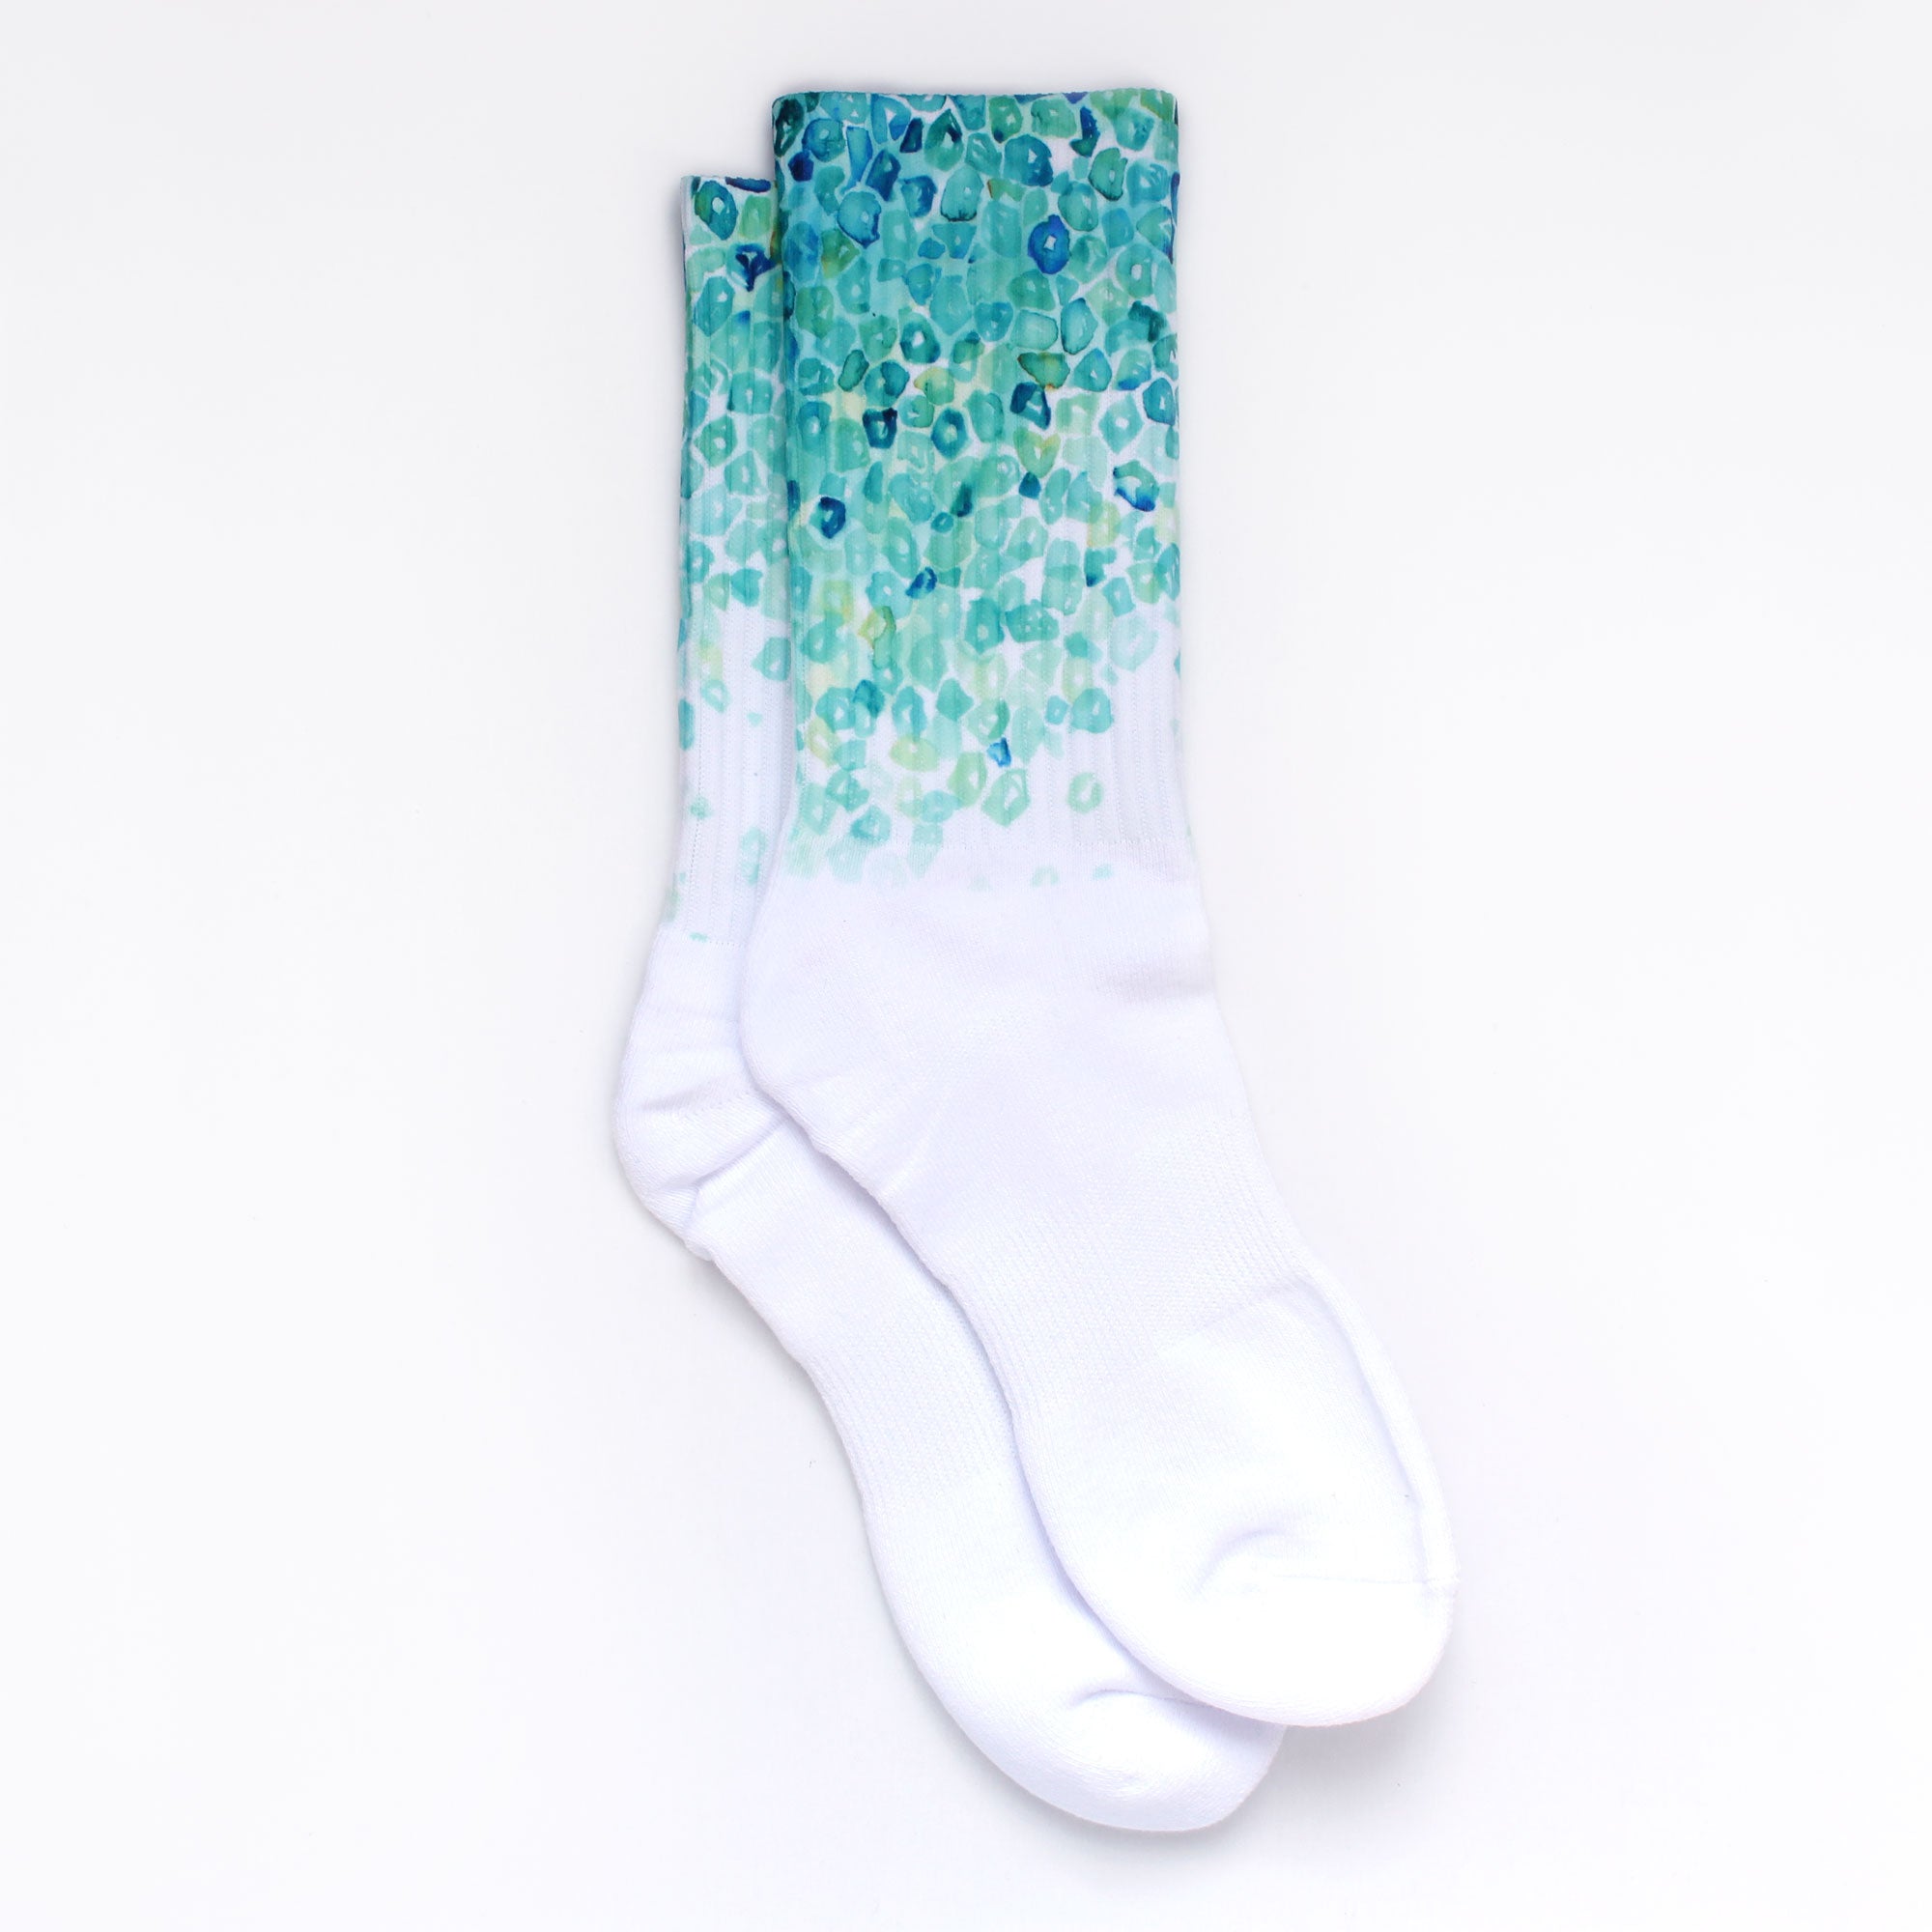 Tapetum Lucidum Anatomy Inspired Socks